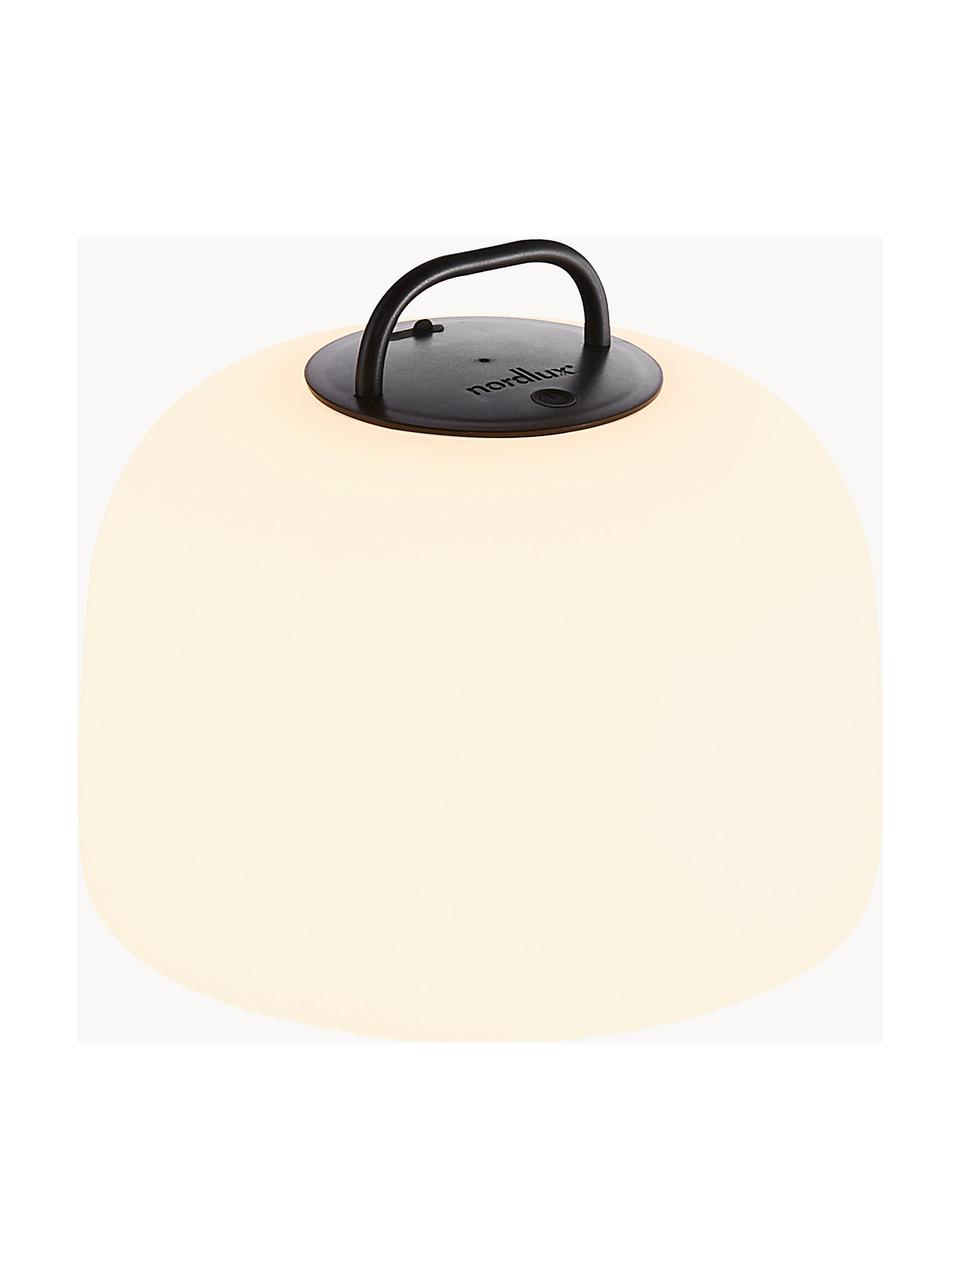 Lampada portatile per esterni a LED con luce regolabile Kettle, Lampada: plastica, Bianco crema, nero, Ø 36 x Alt. 31 cm